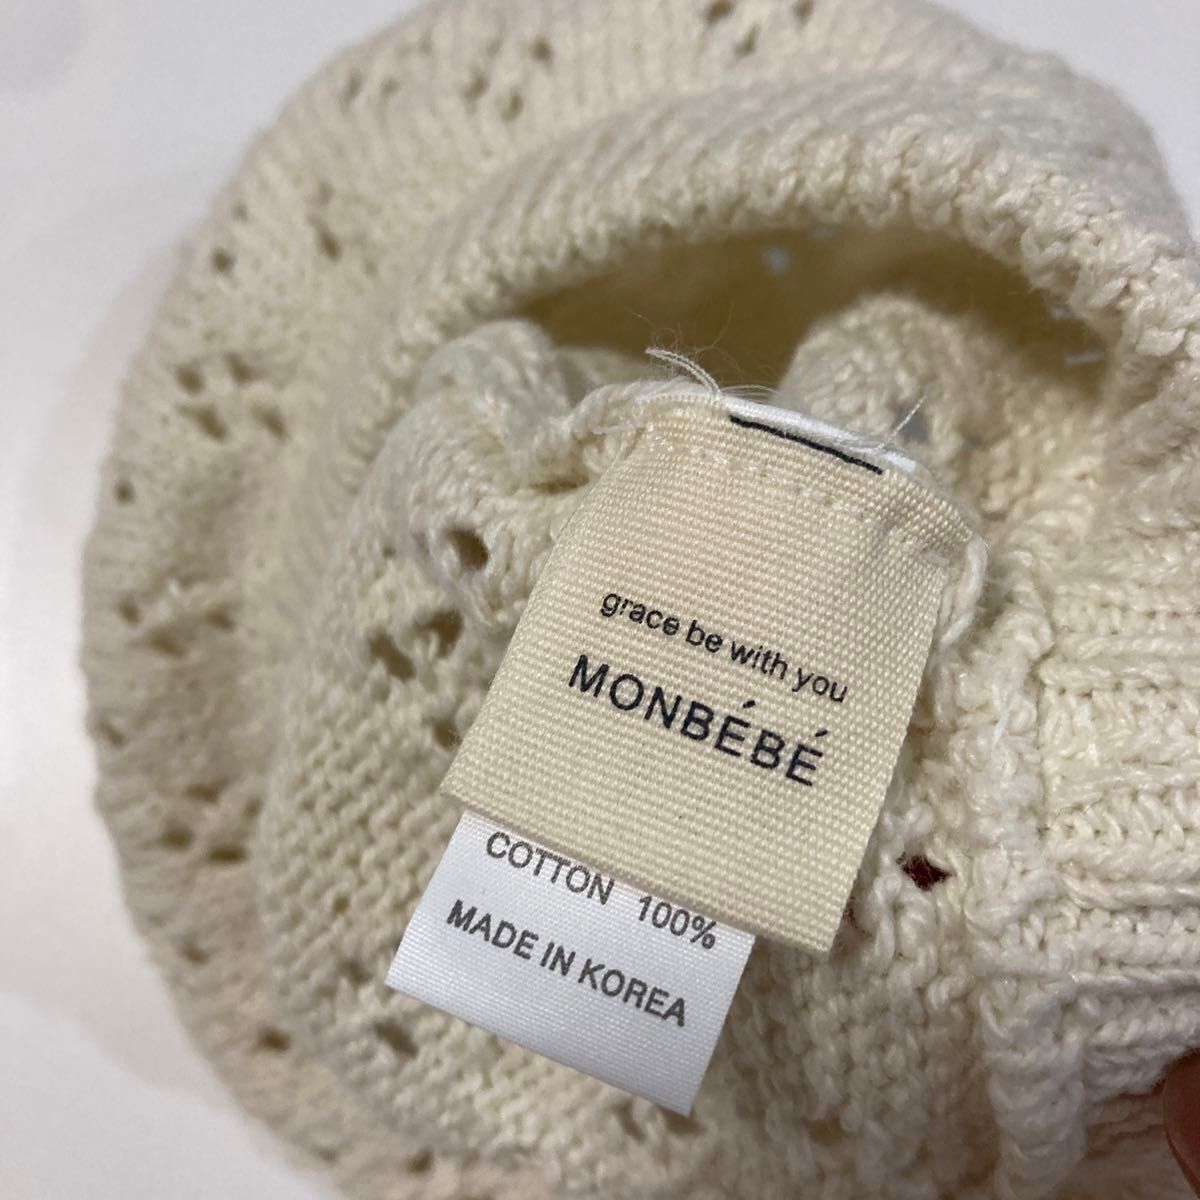 112 monbebe ベレー帽 かぎ編み 子供用 帽子